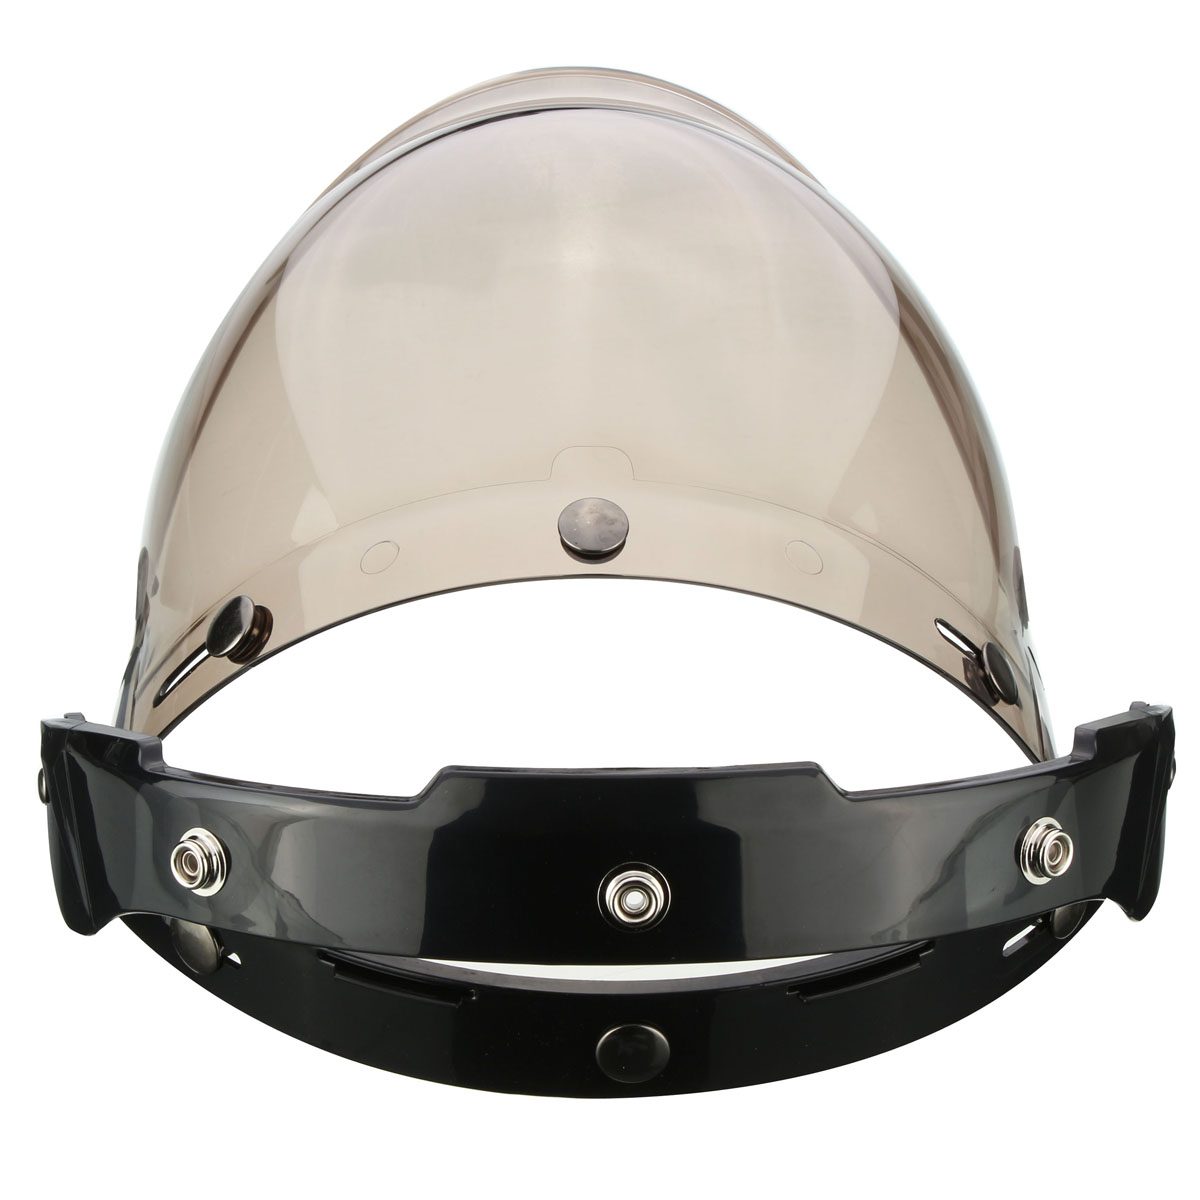 Visor de burbuja con 3 botones a presión, lente de protección facial contra el viento abatible hacia arriba para casco de motocicleta, 3 colores